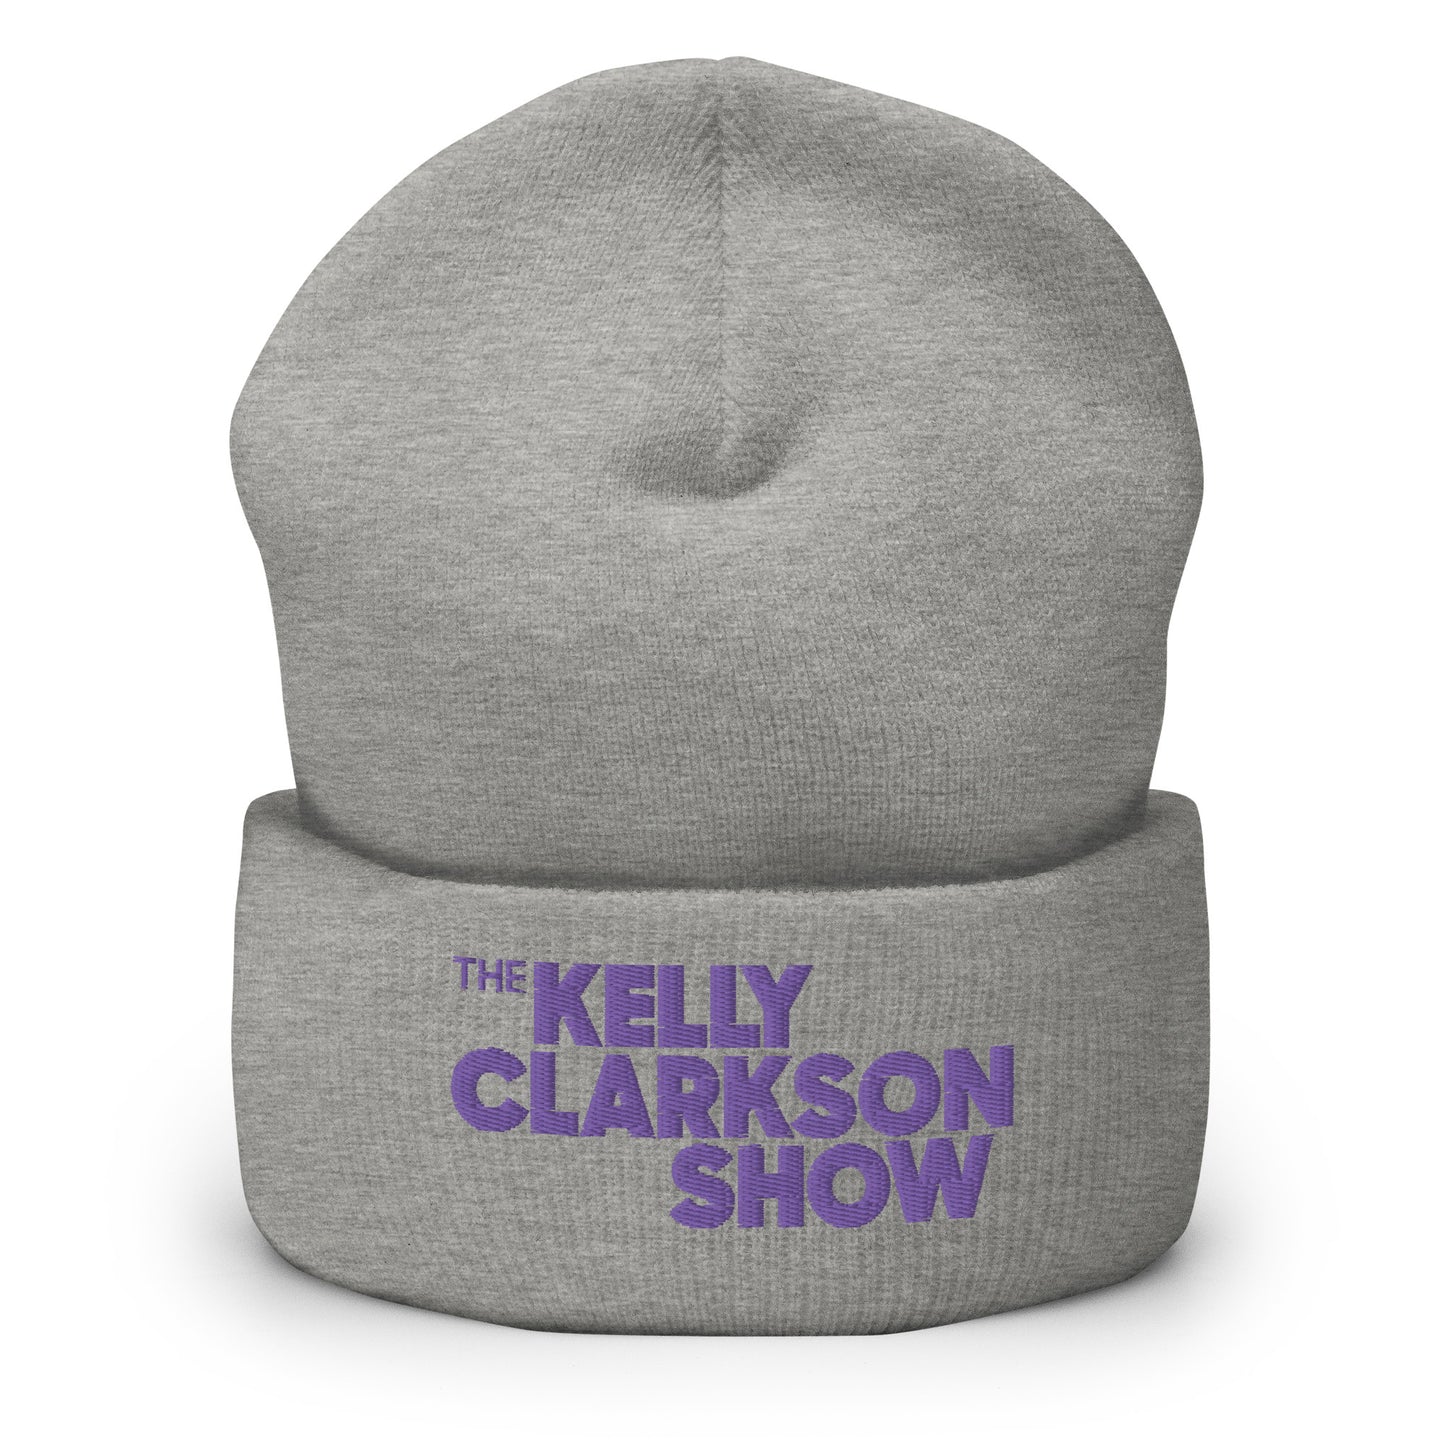 The Kelly Clarkson Show Logo Cuffed Beanie